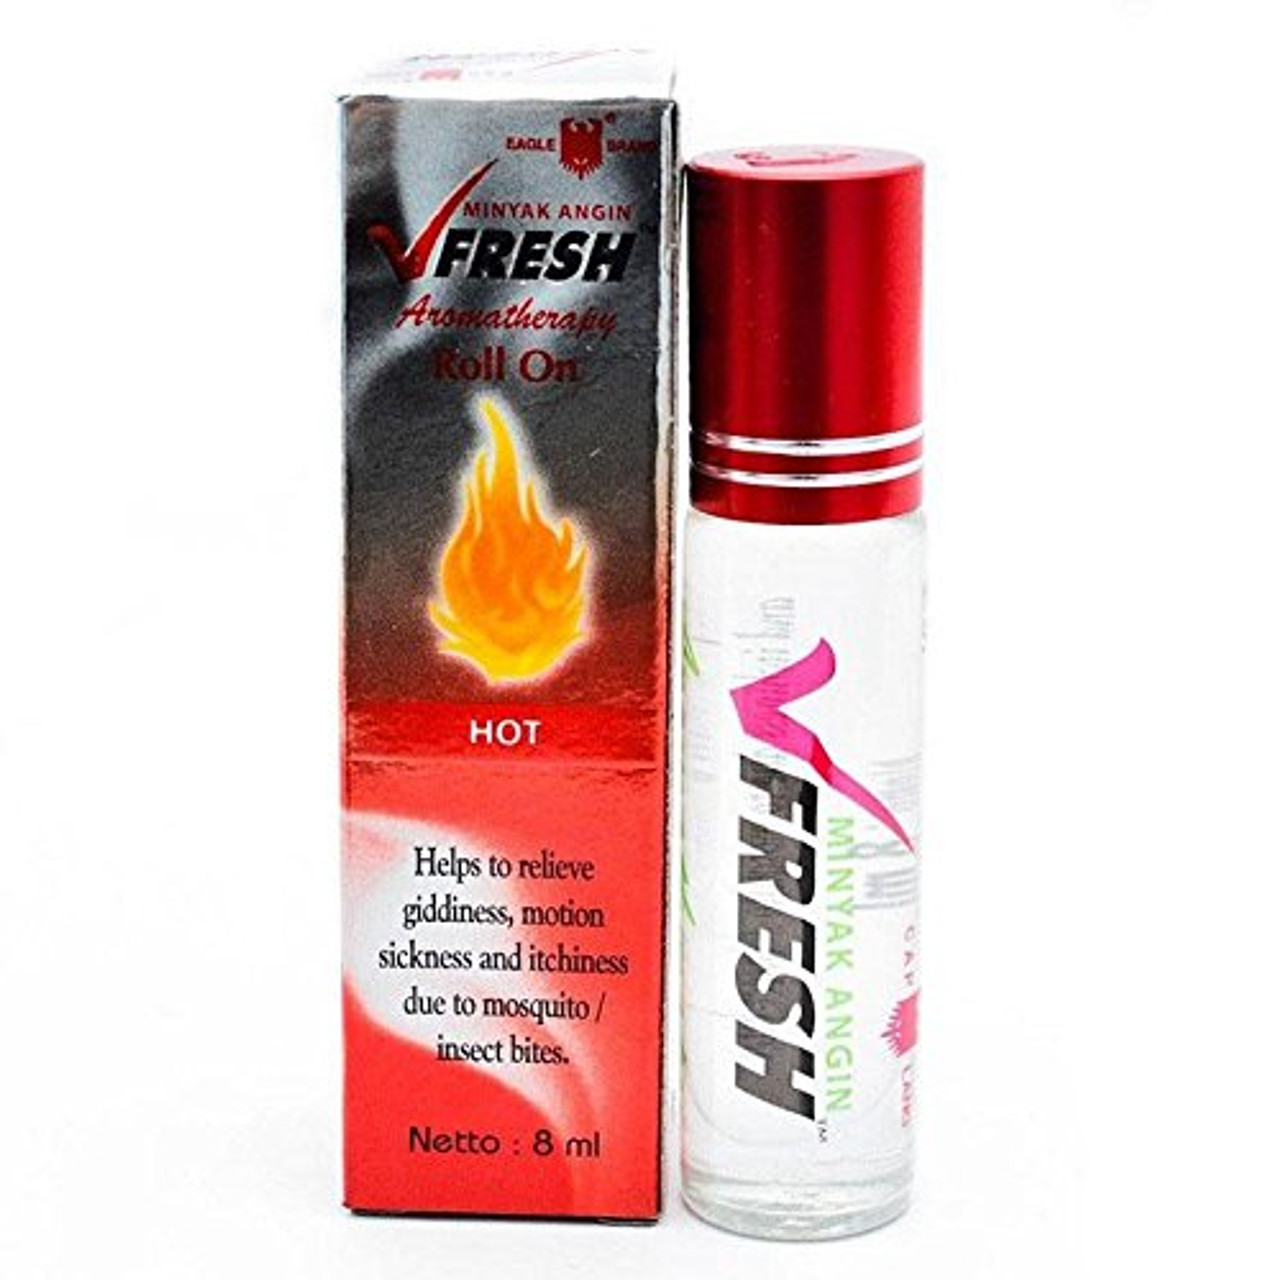 VFresh Hot Aromatherapy Roll-On Oil, 8ml